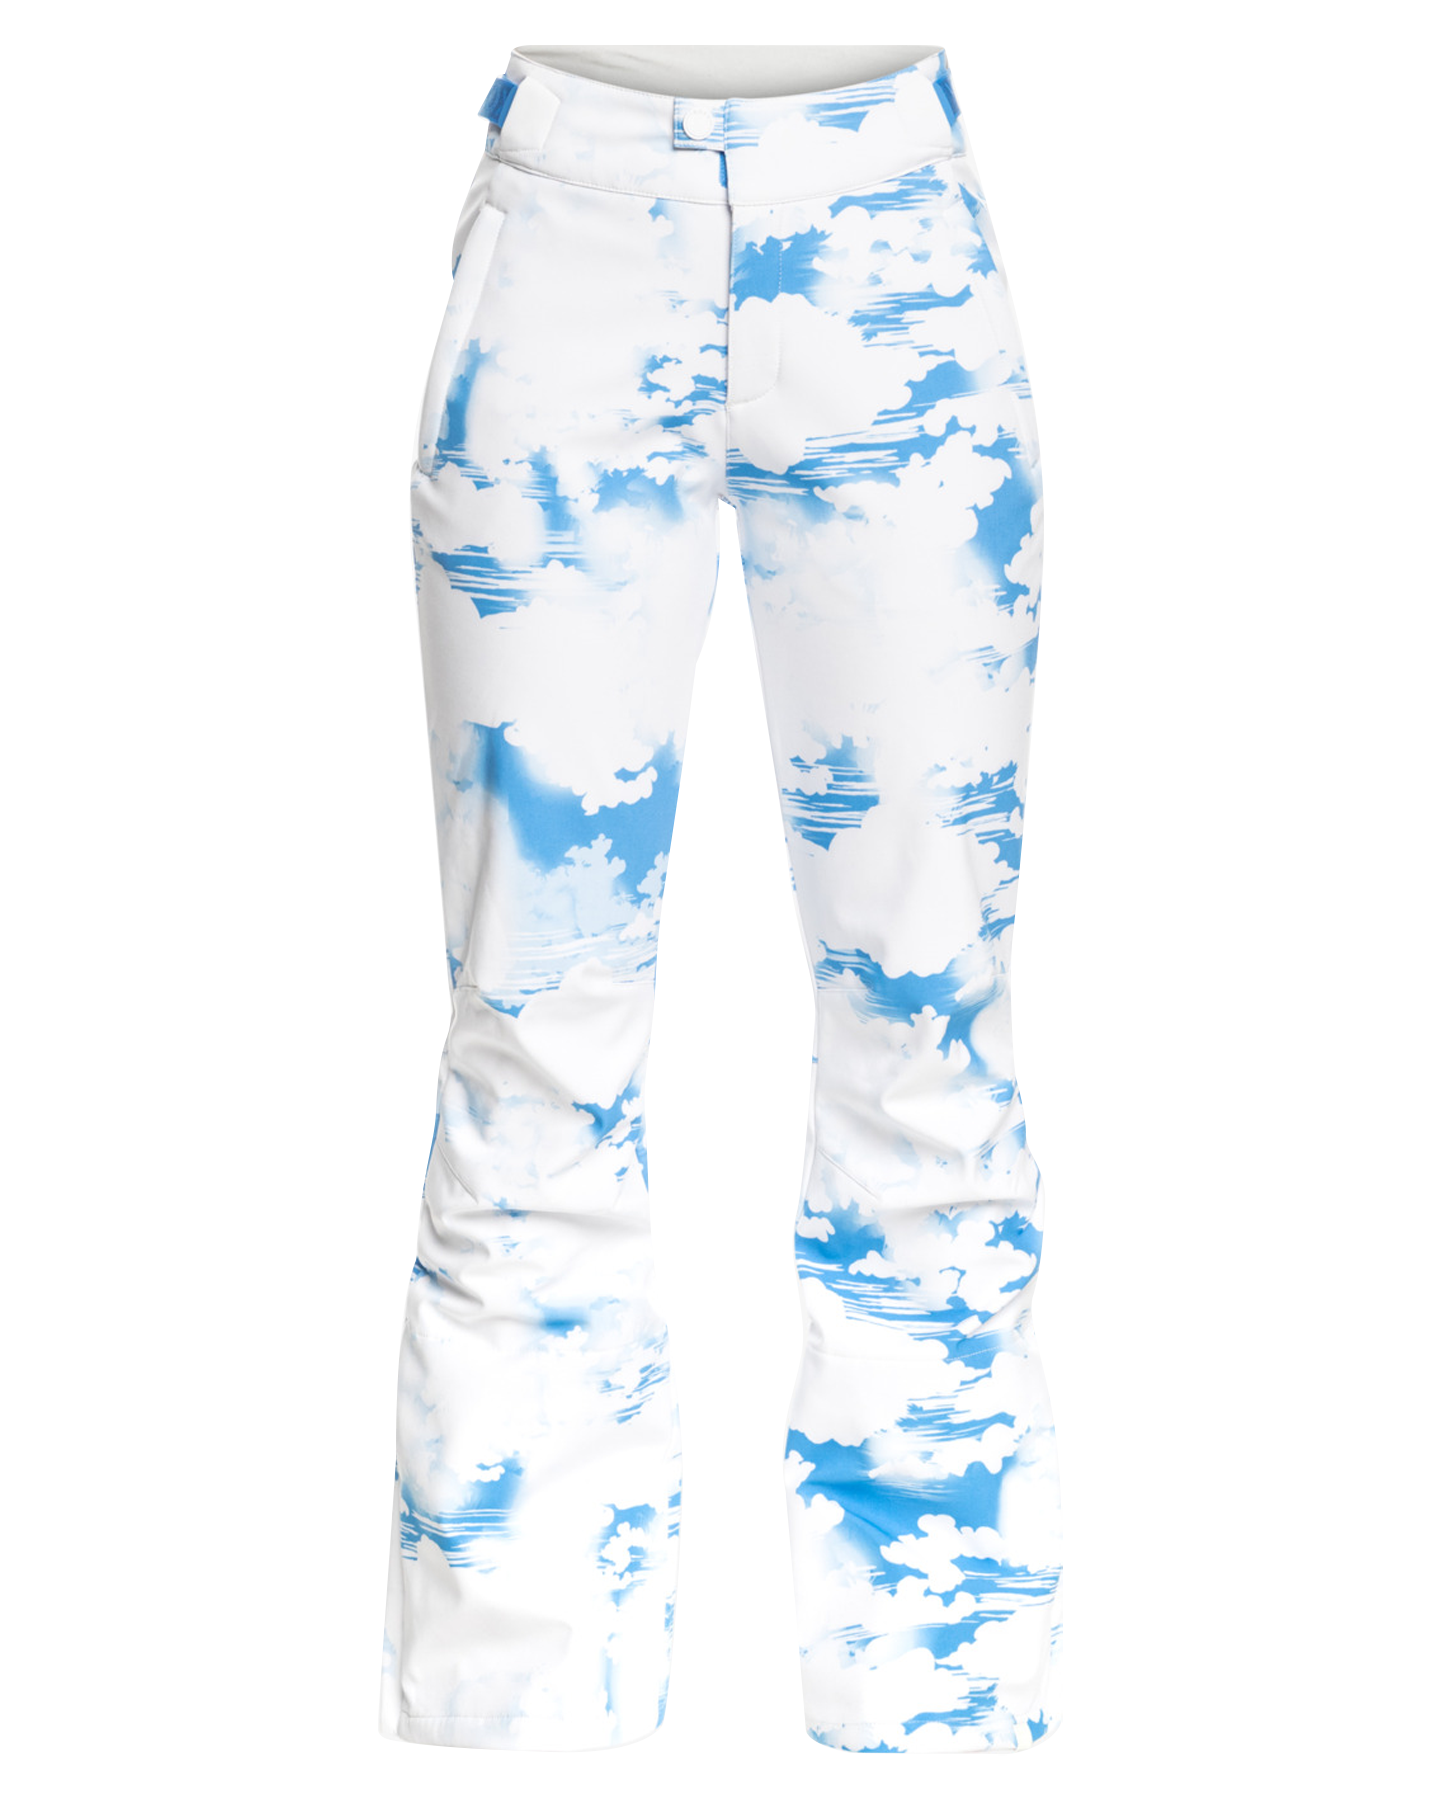 Roxy Women's Chloe Kim Technical Snow Pants - Azure Blue Clouds Women's Snow Pants - SnowSkiersWarehouse